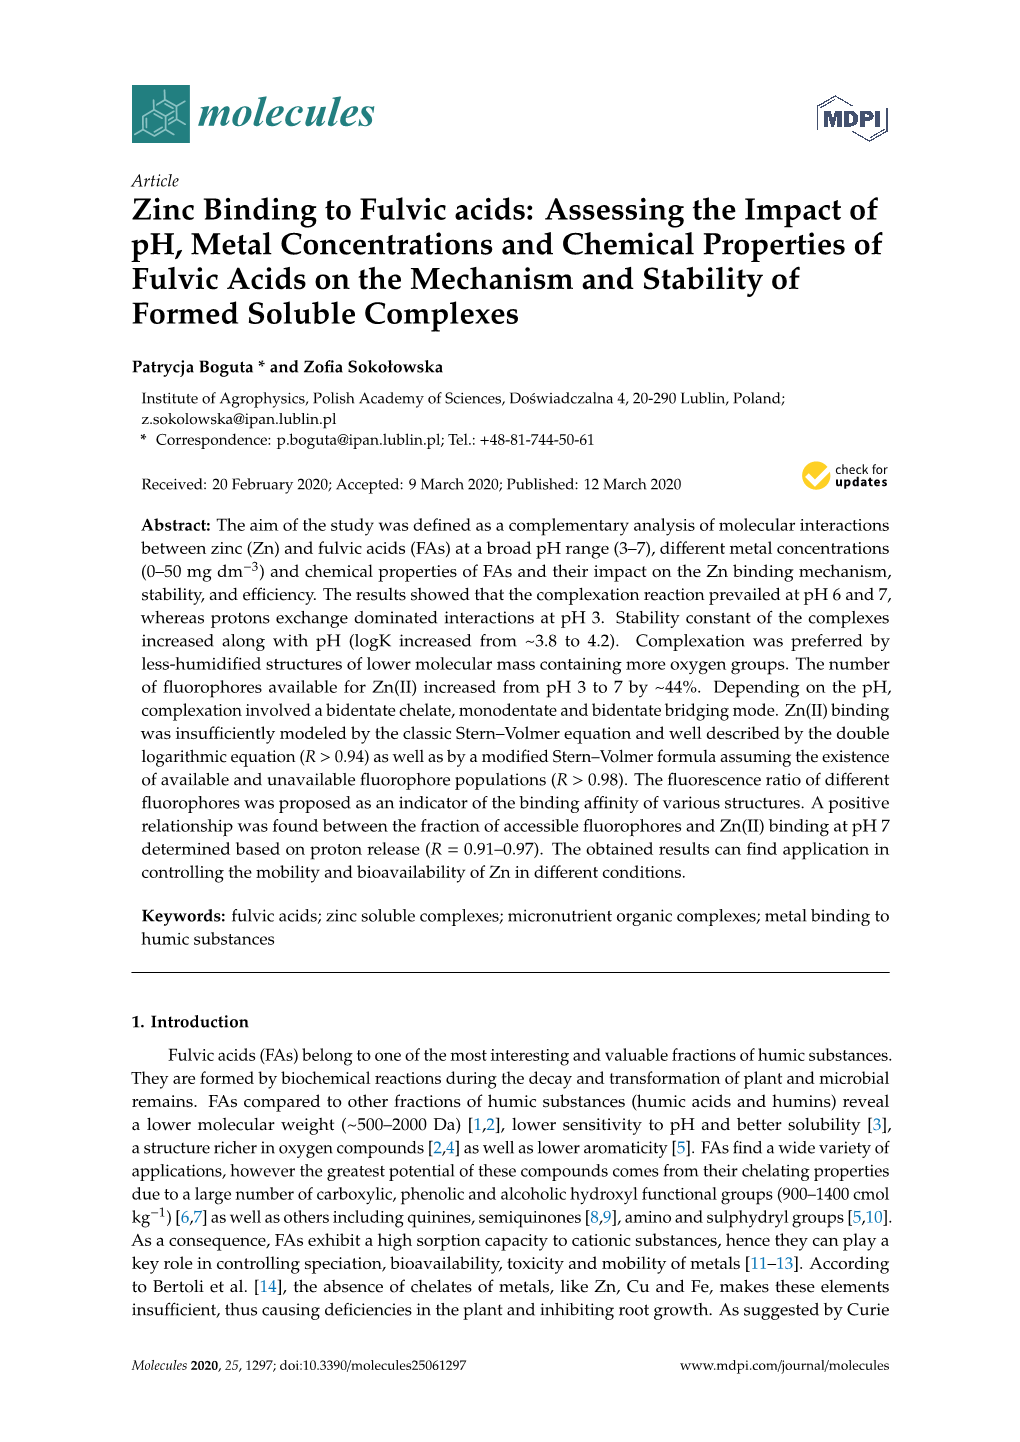 Zinc Binding to Fulvic Acids: Assessing the Impact of Ph, Metal